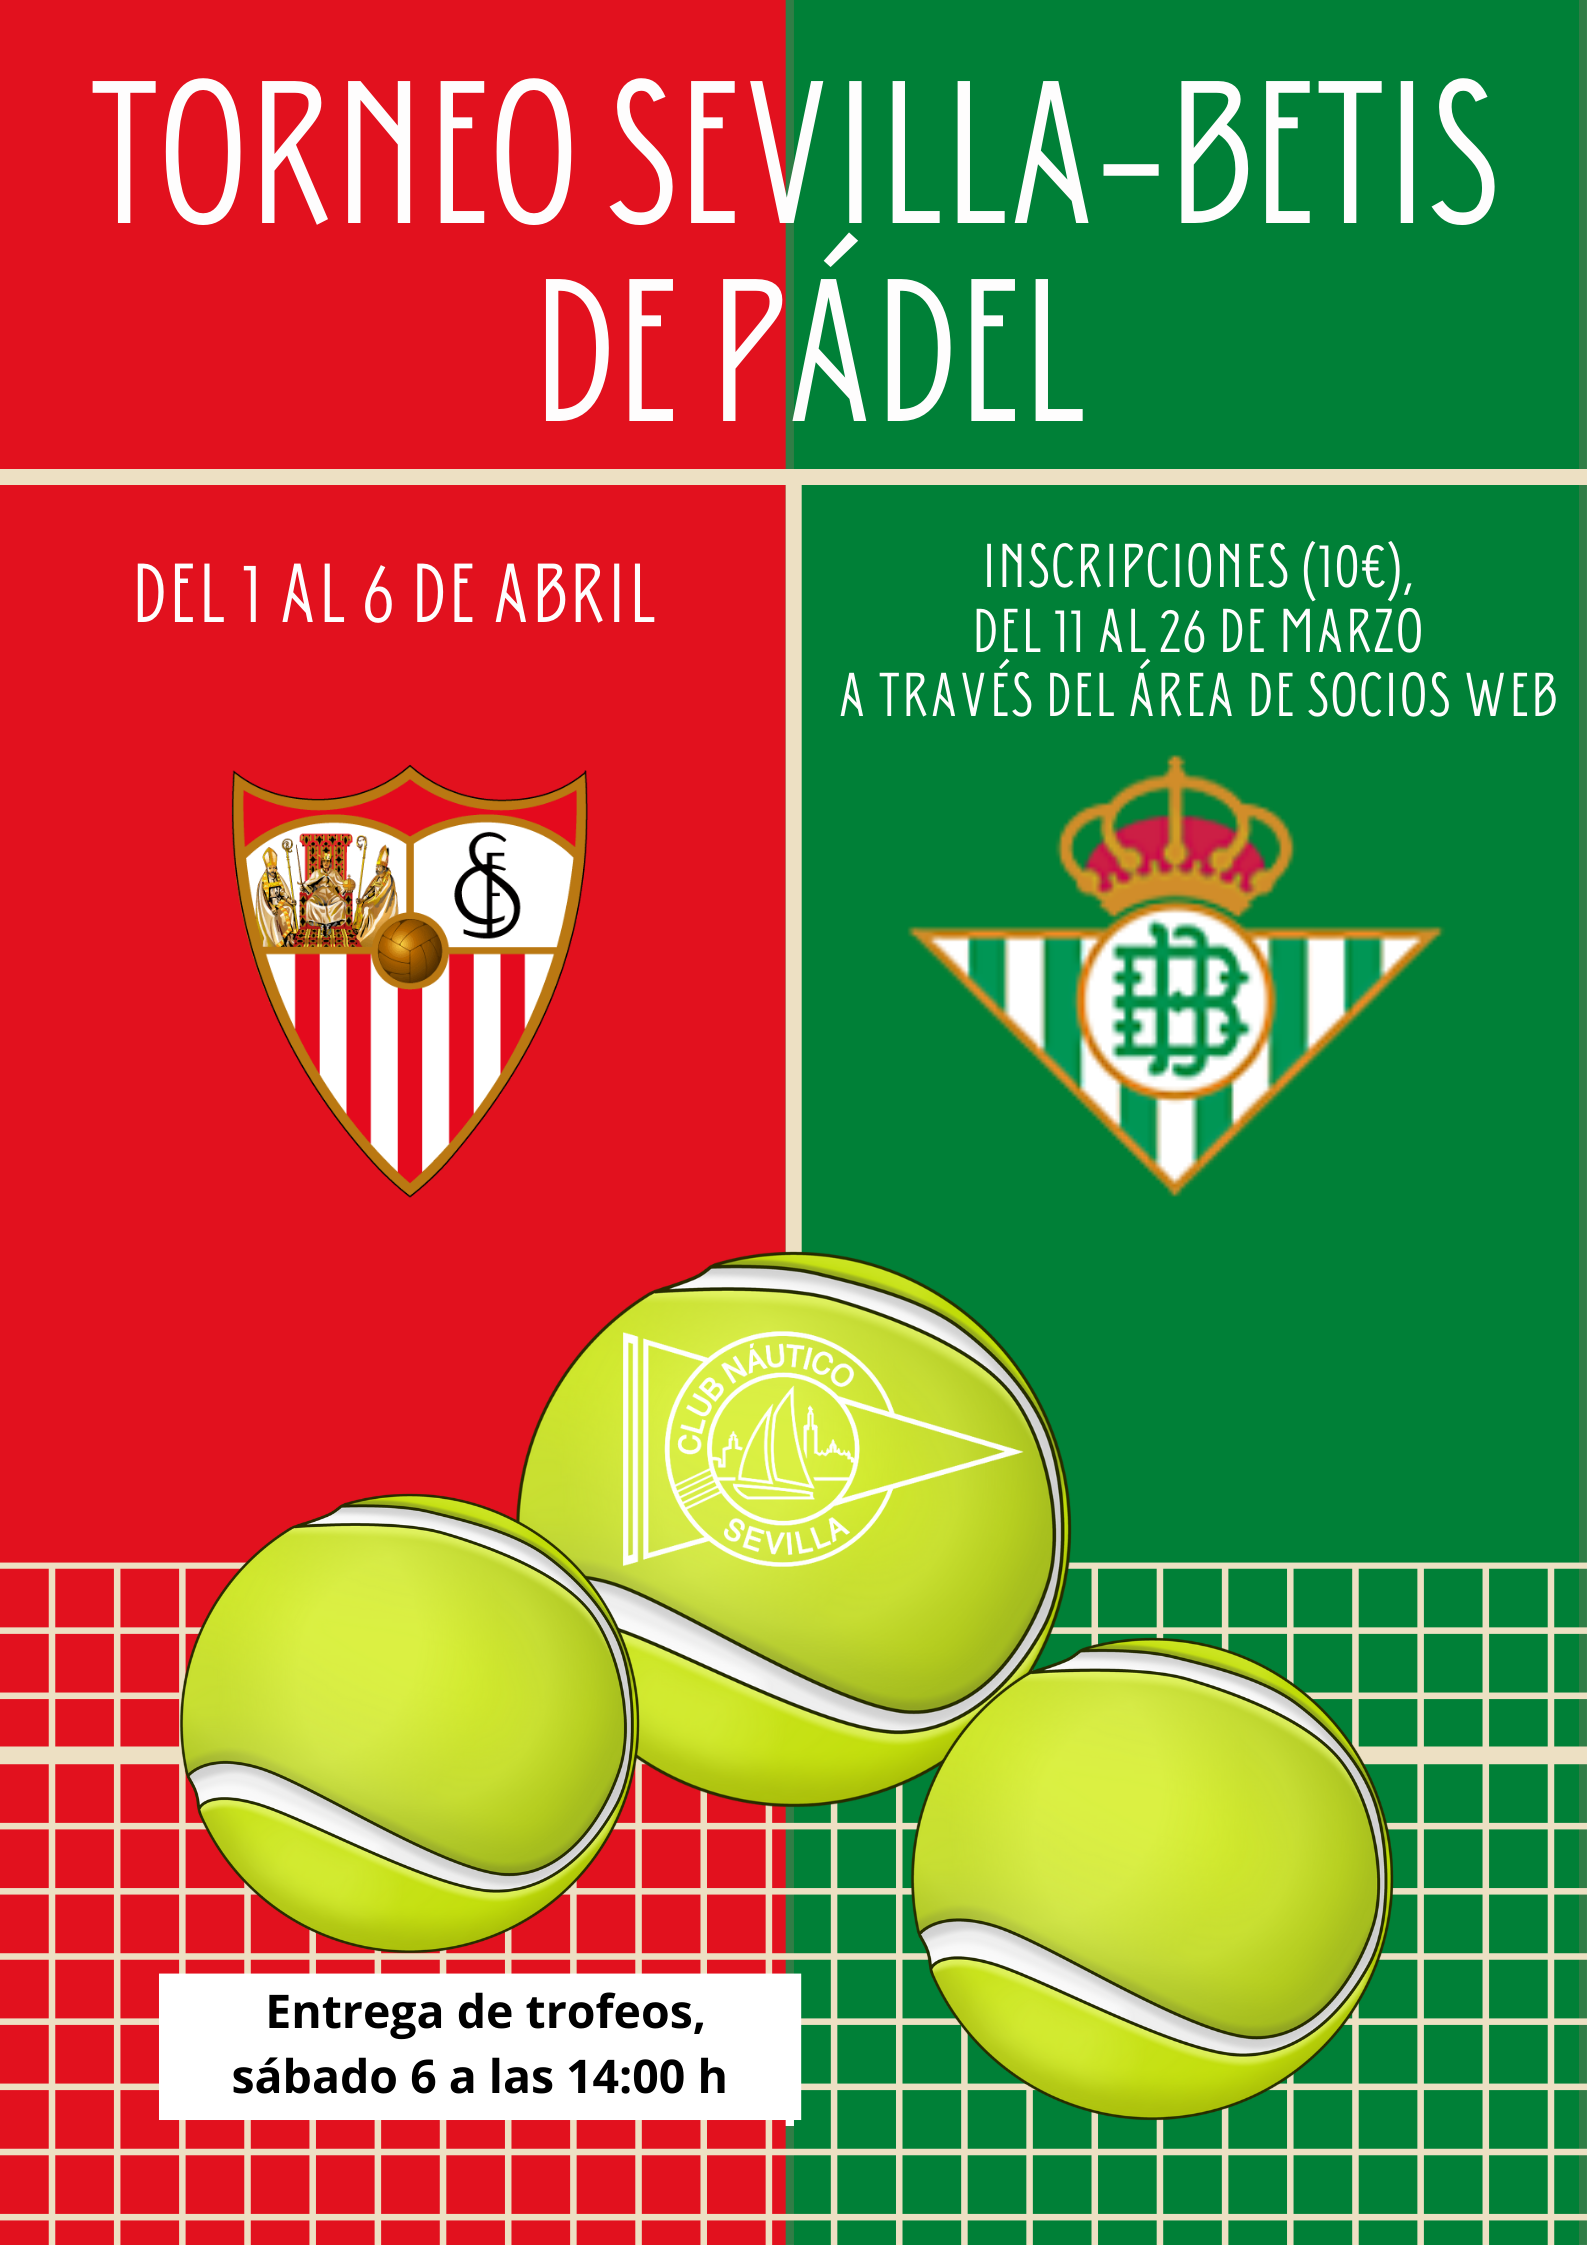 Torneo Sevilla-Betis de pádel